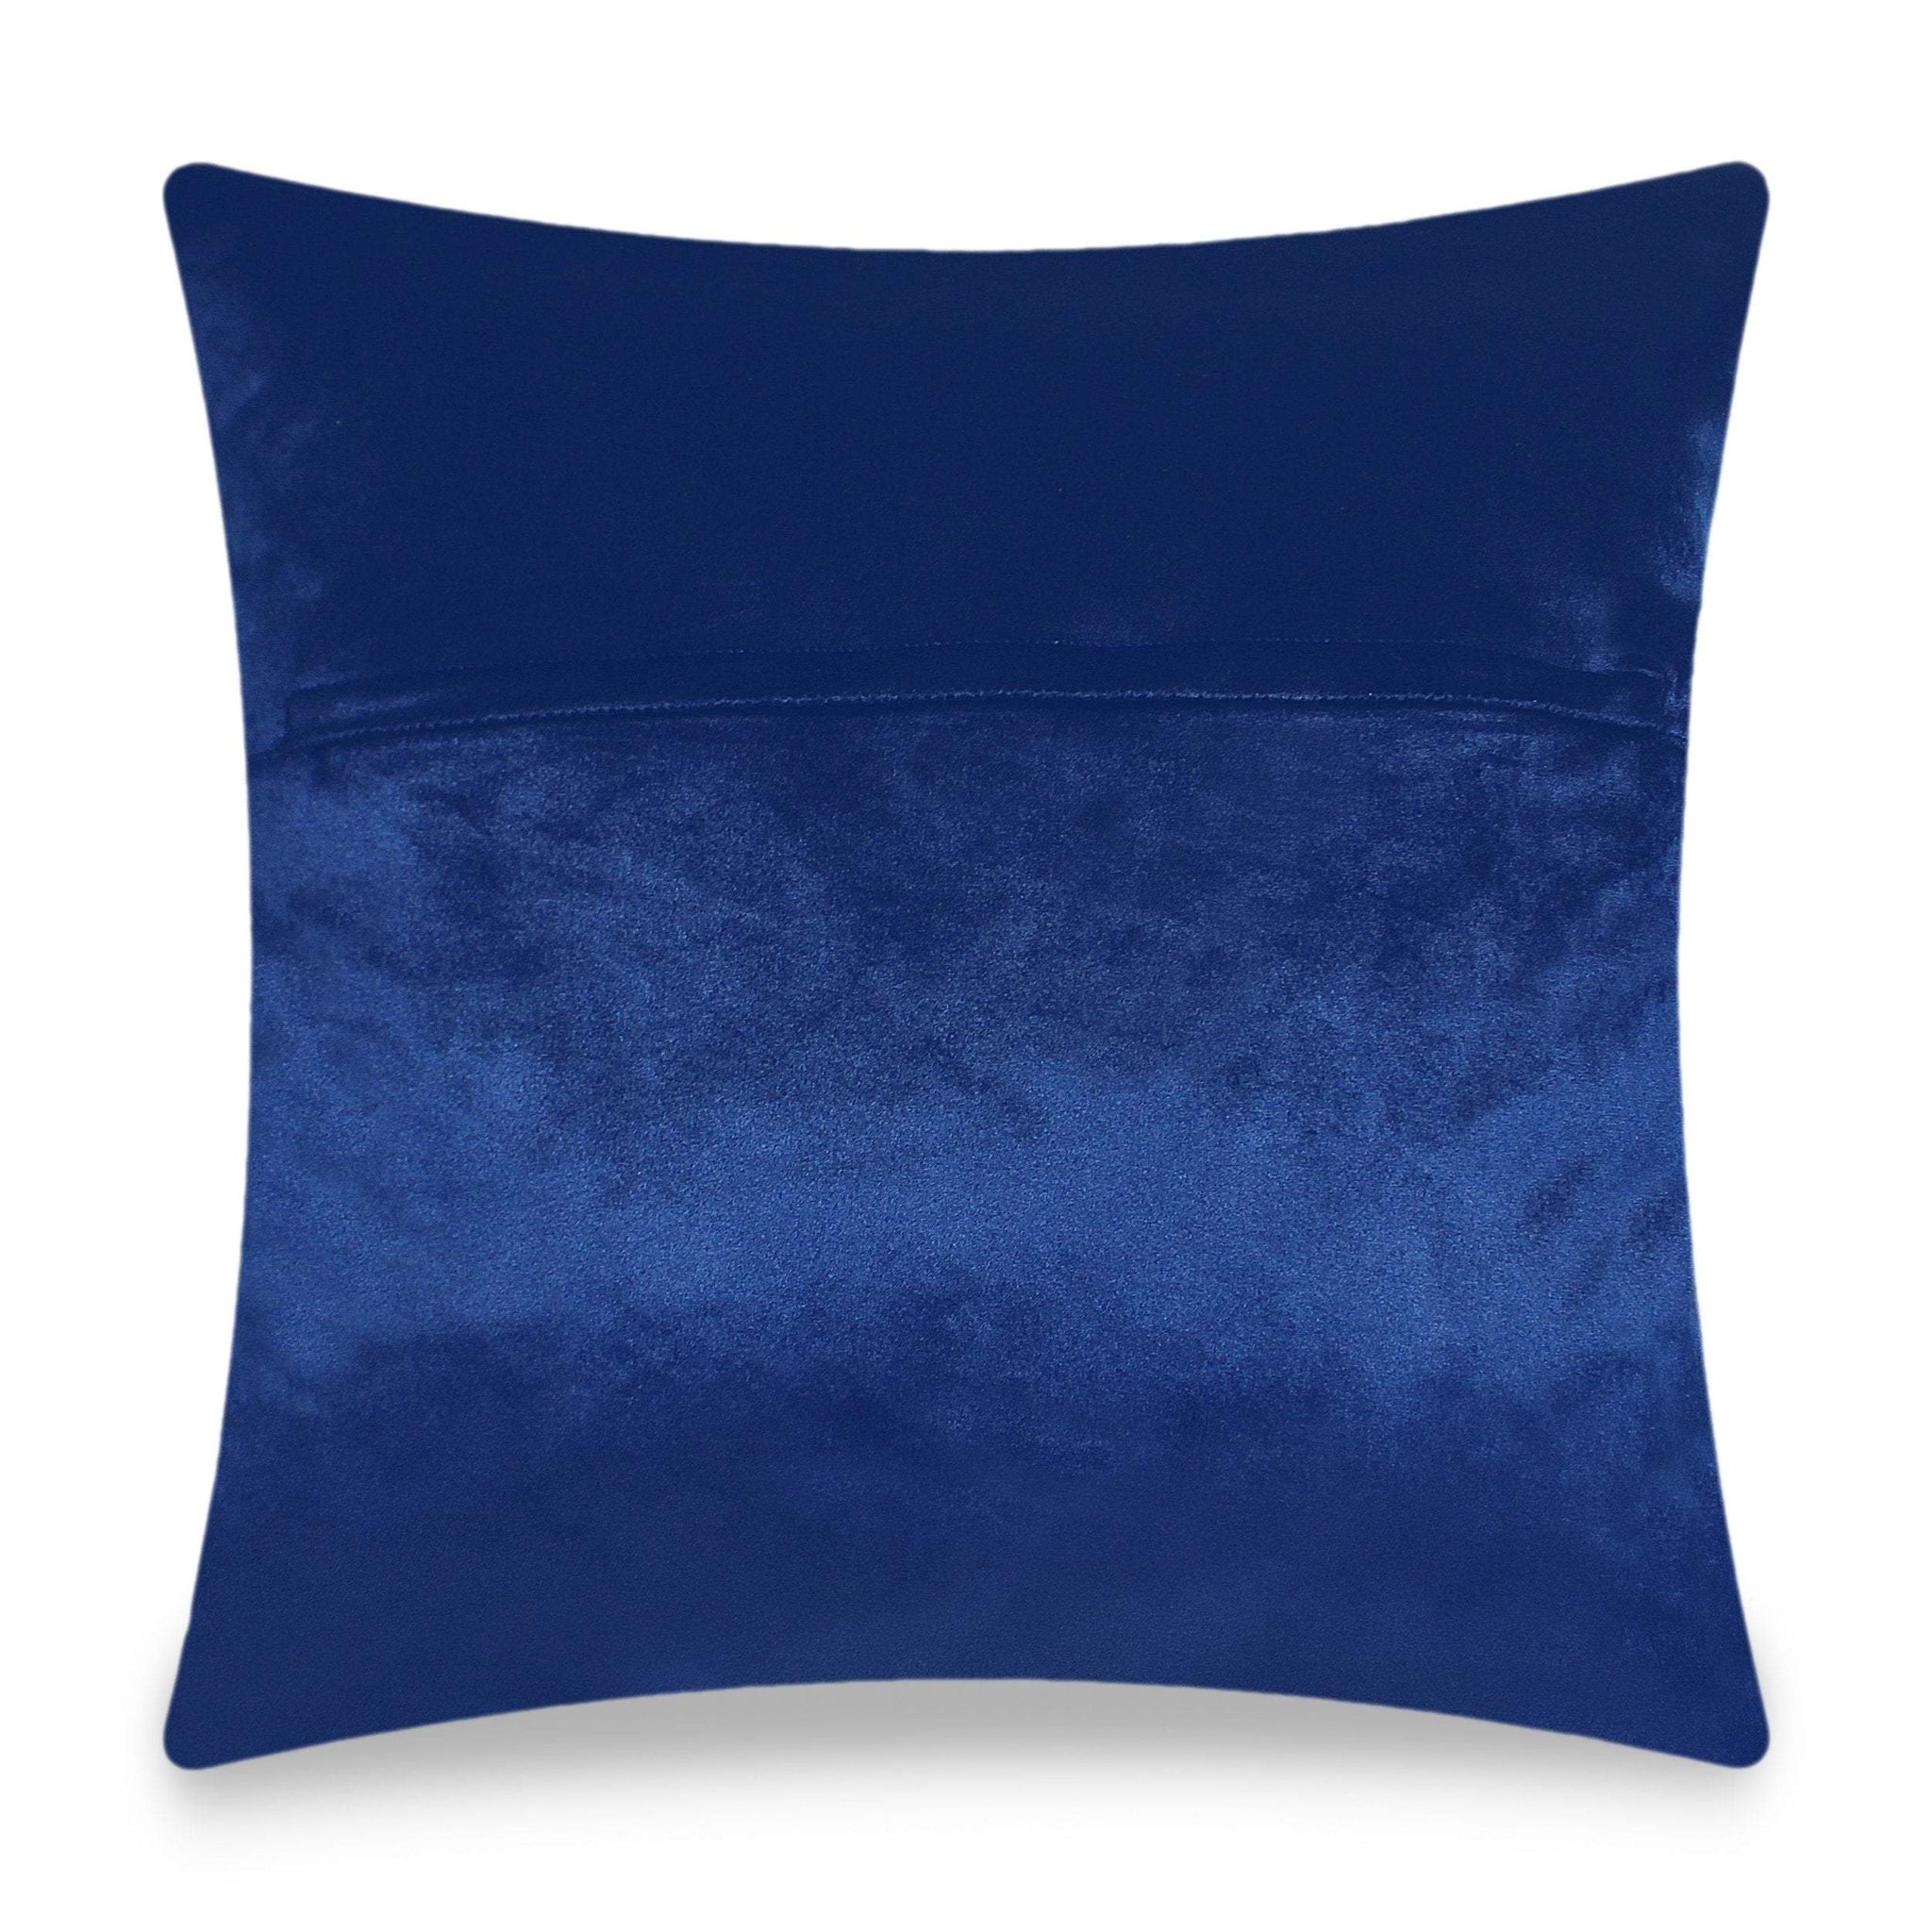 Navy Blue Luxury Baroque Style Decorative Embroidered Cushion Cover Velvet Pillow Case Home European Sofa Throw Pillow